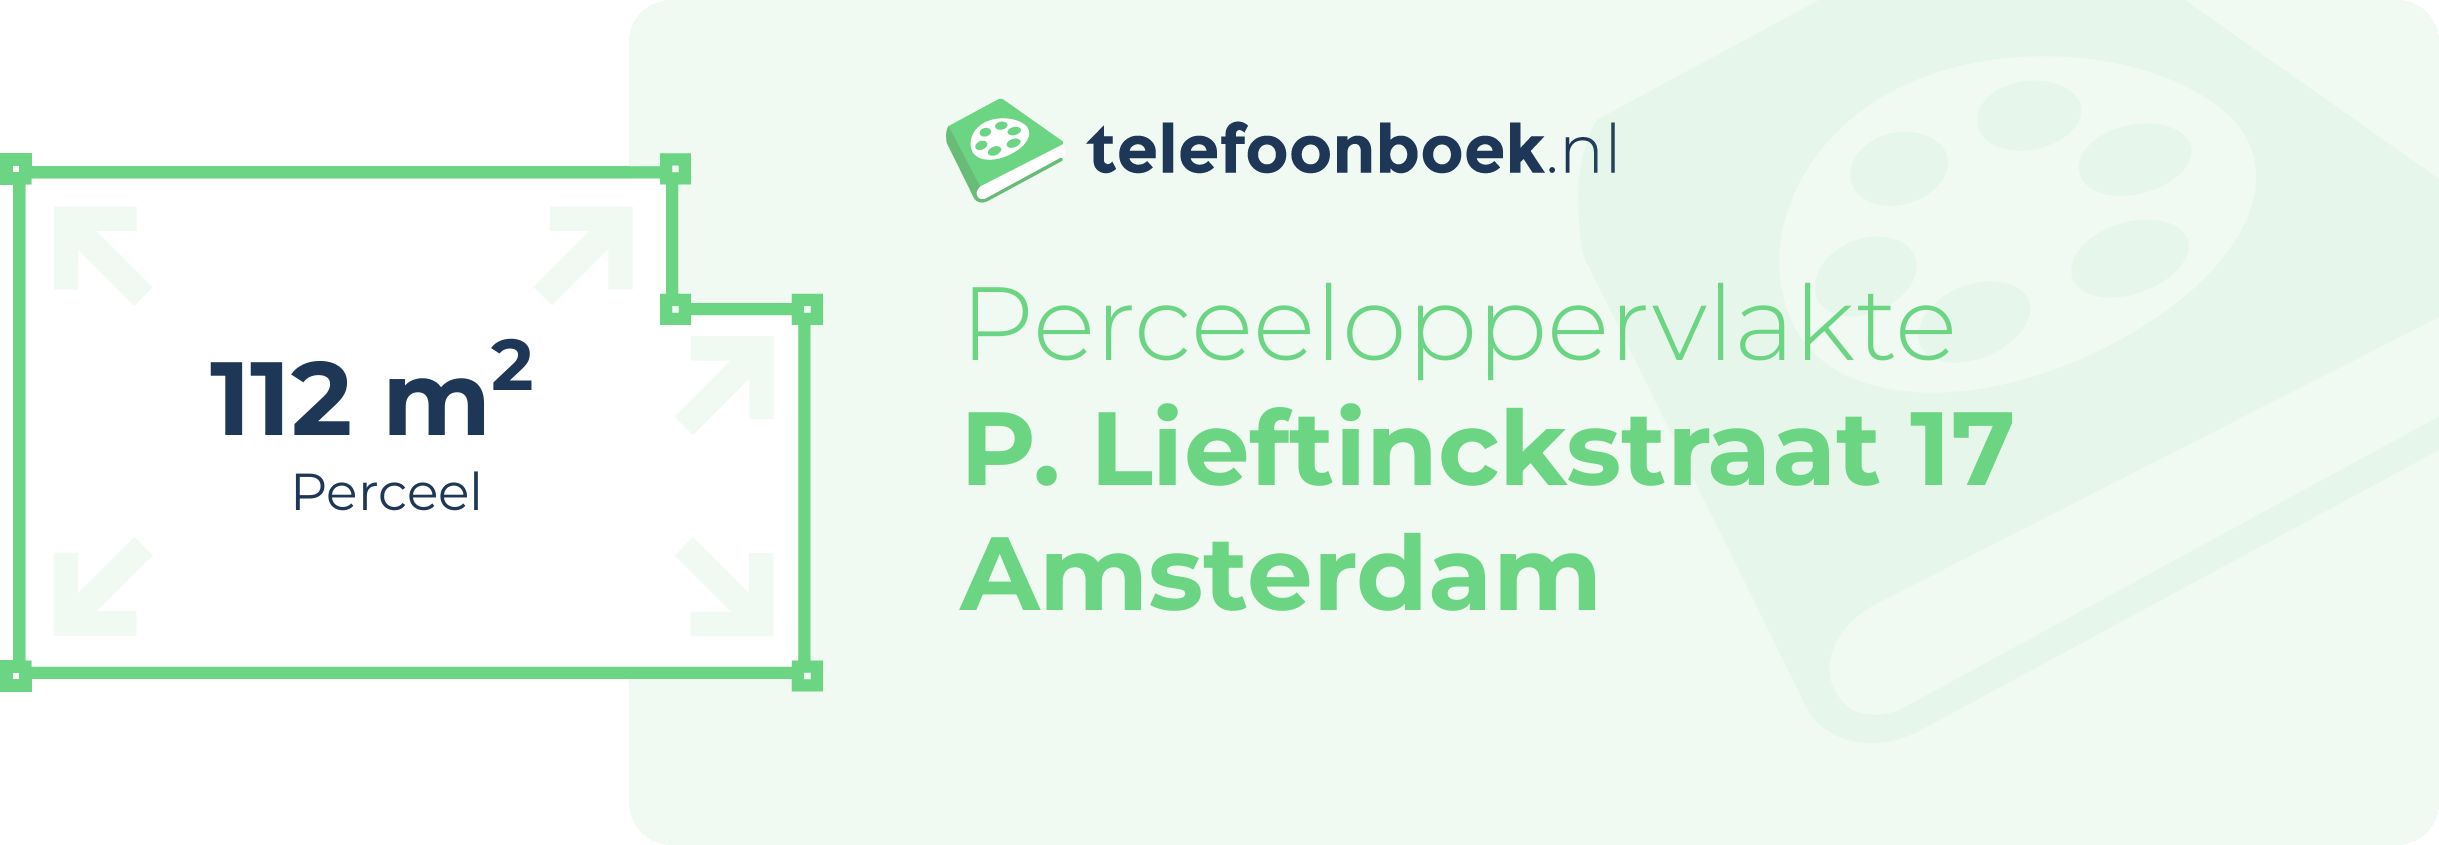 Perceeloppervlakte P. Lieftinckstraat 17 Amsterdam